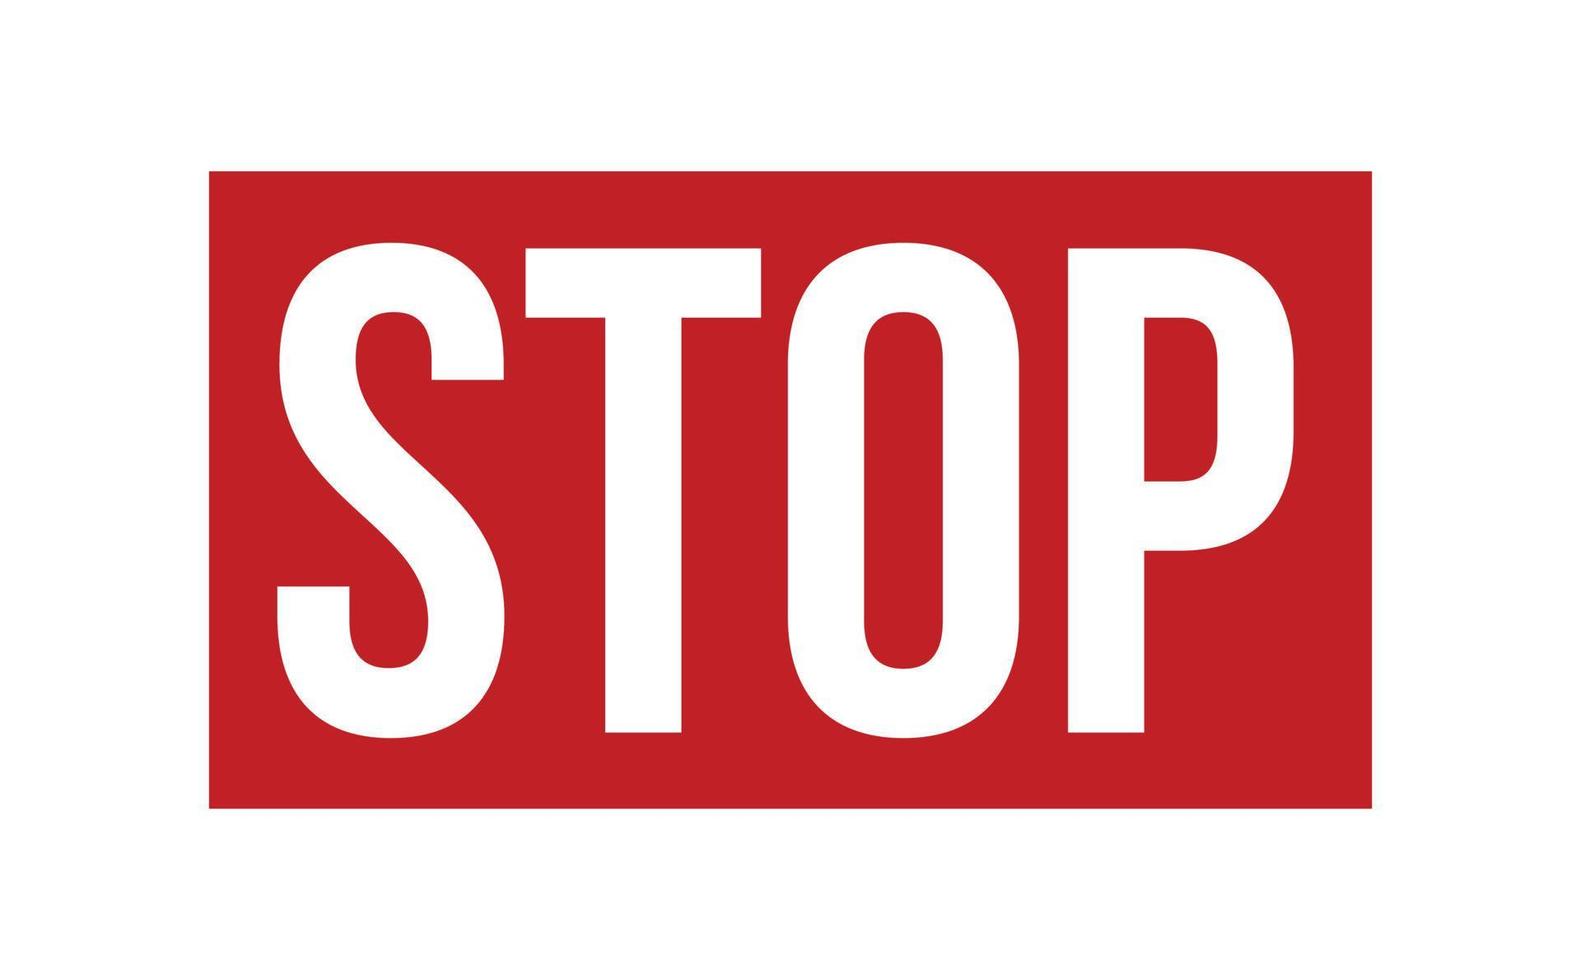 Stop Rubber Stamp. Red Stop Rubber Grunge Stamp Seal Vector Illustration - Vector